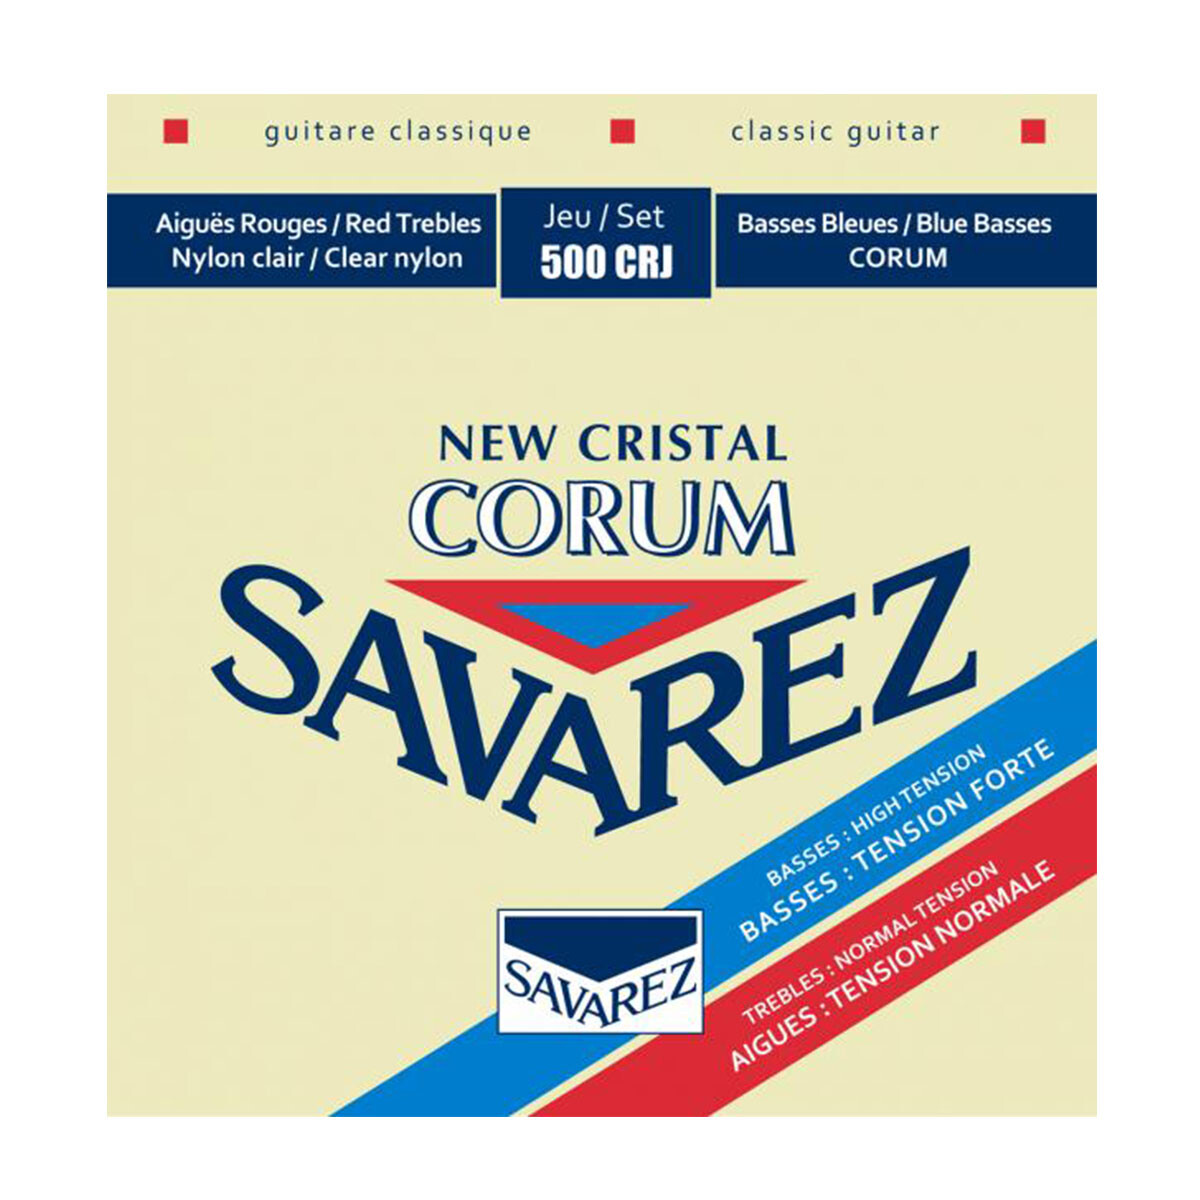 Encordado Clásica Savarez New Cristal Corum R A 